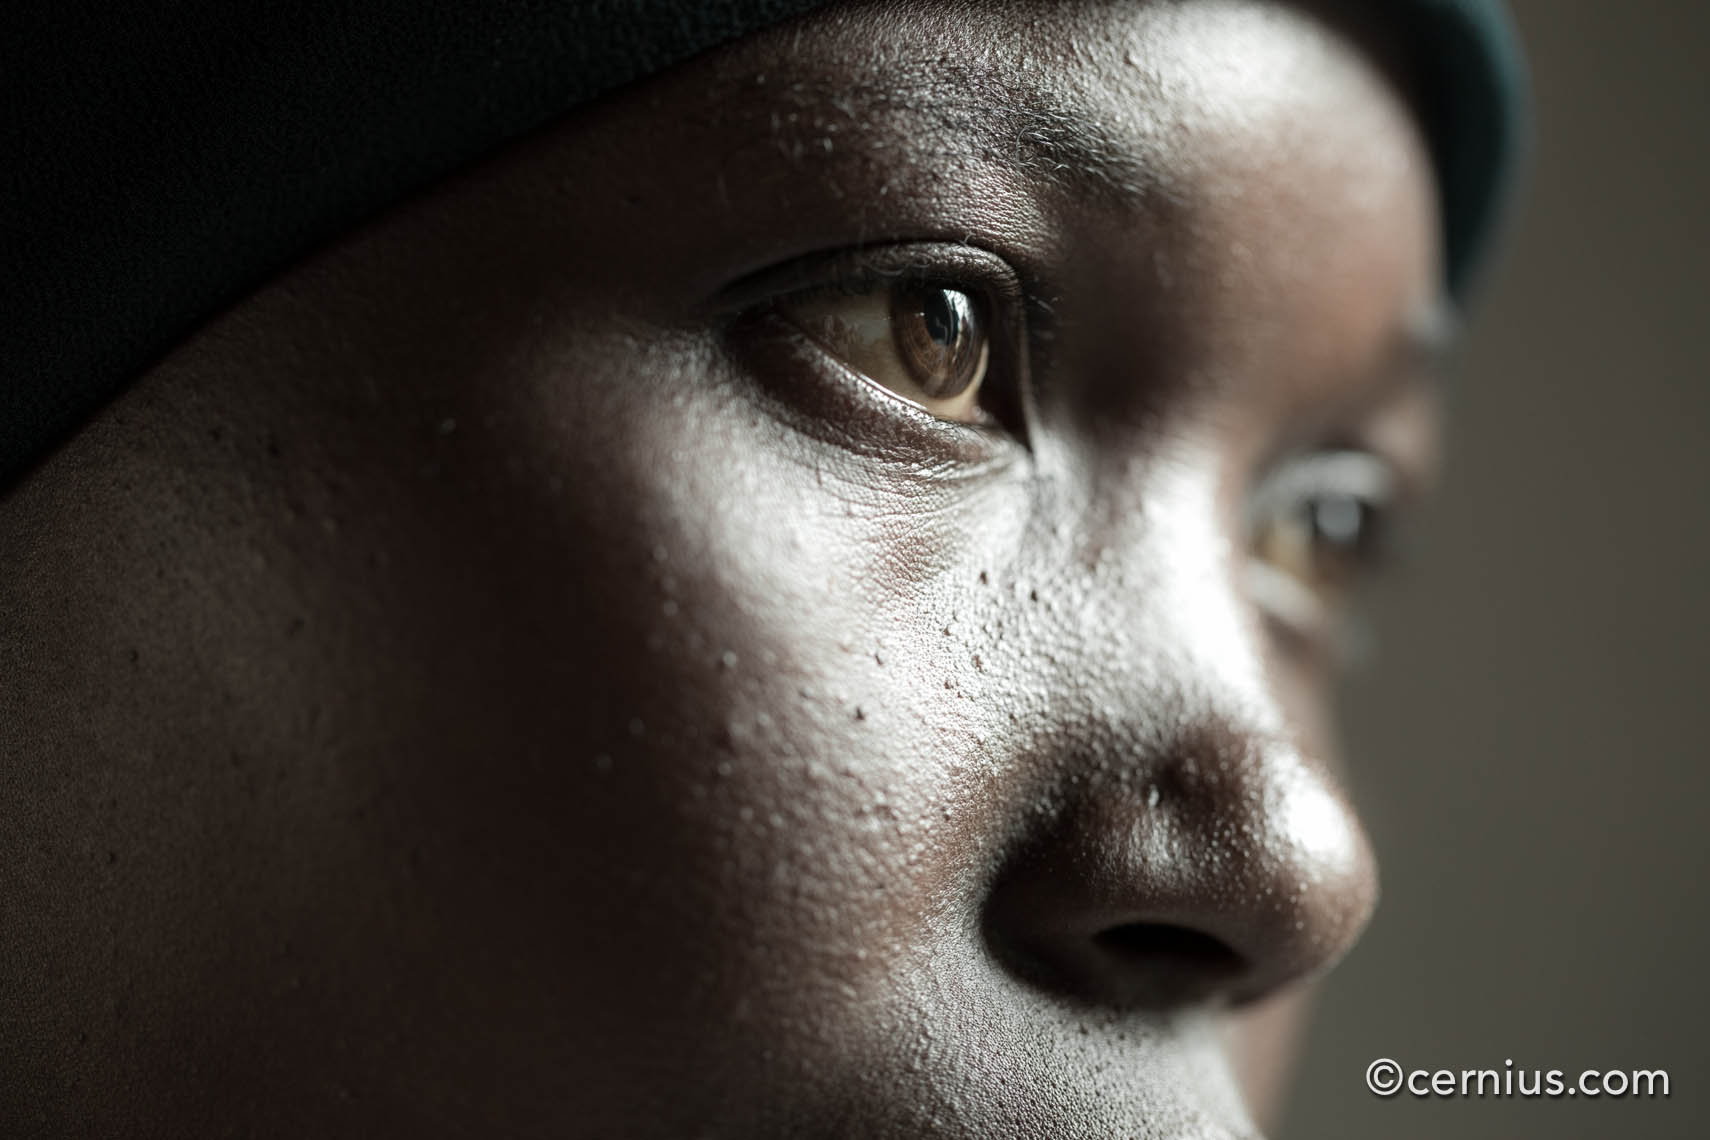 Location Portraits, Rwanda | Juozas Cernius